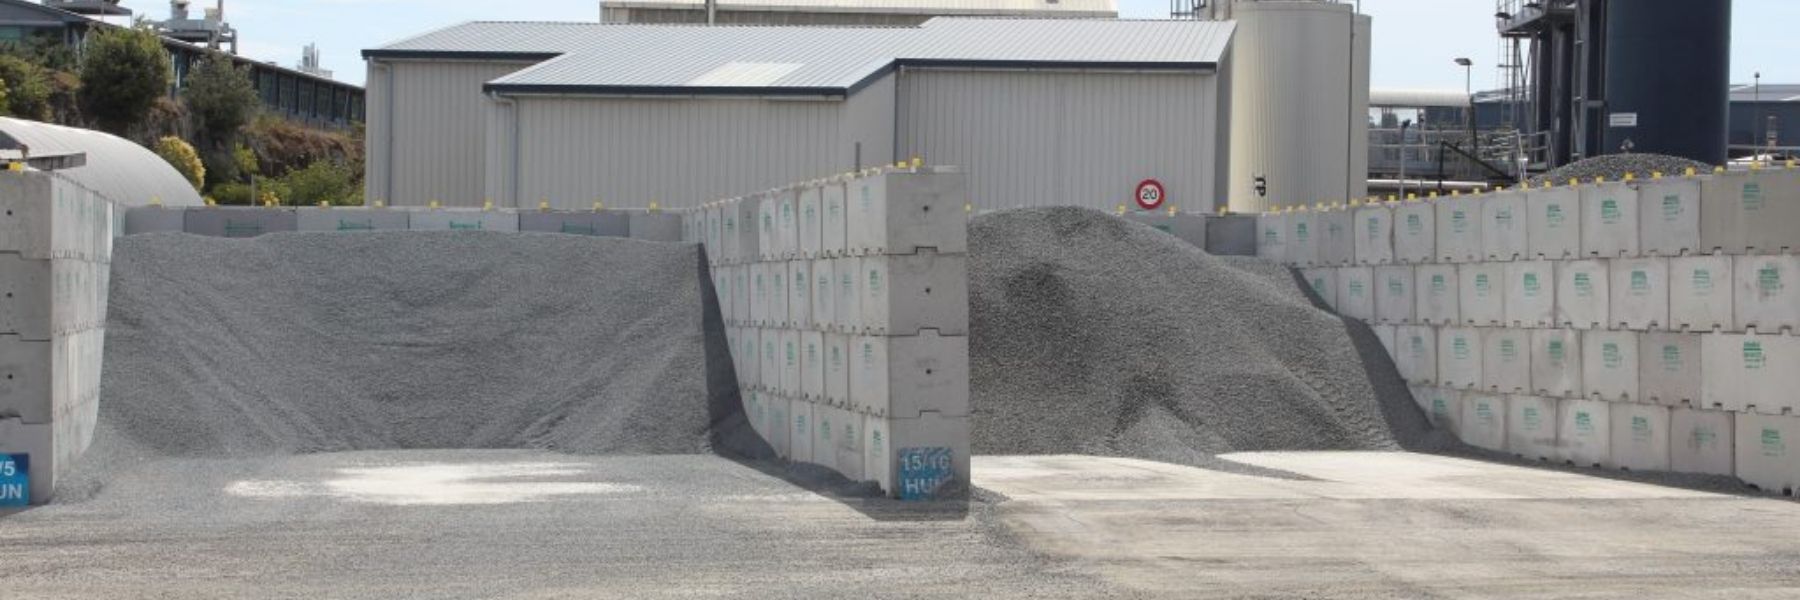 Interbloc concrete blocks used for aggregate storage at Fulton Hogan